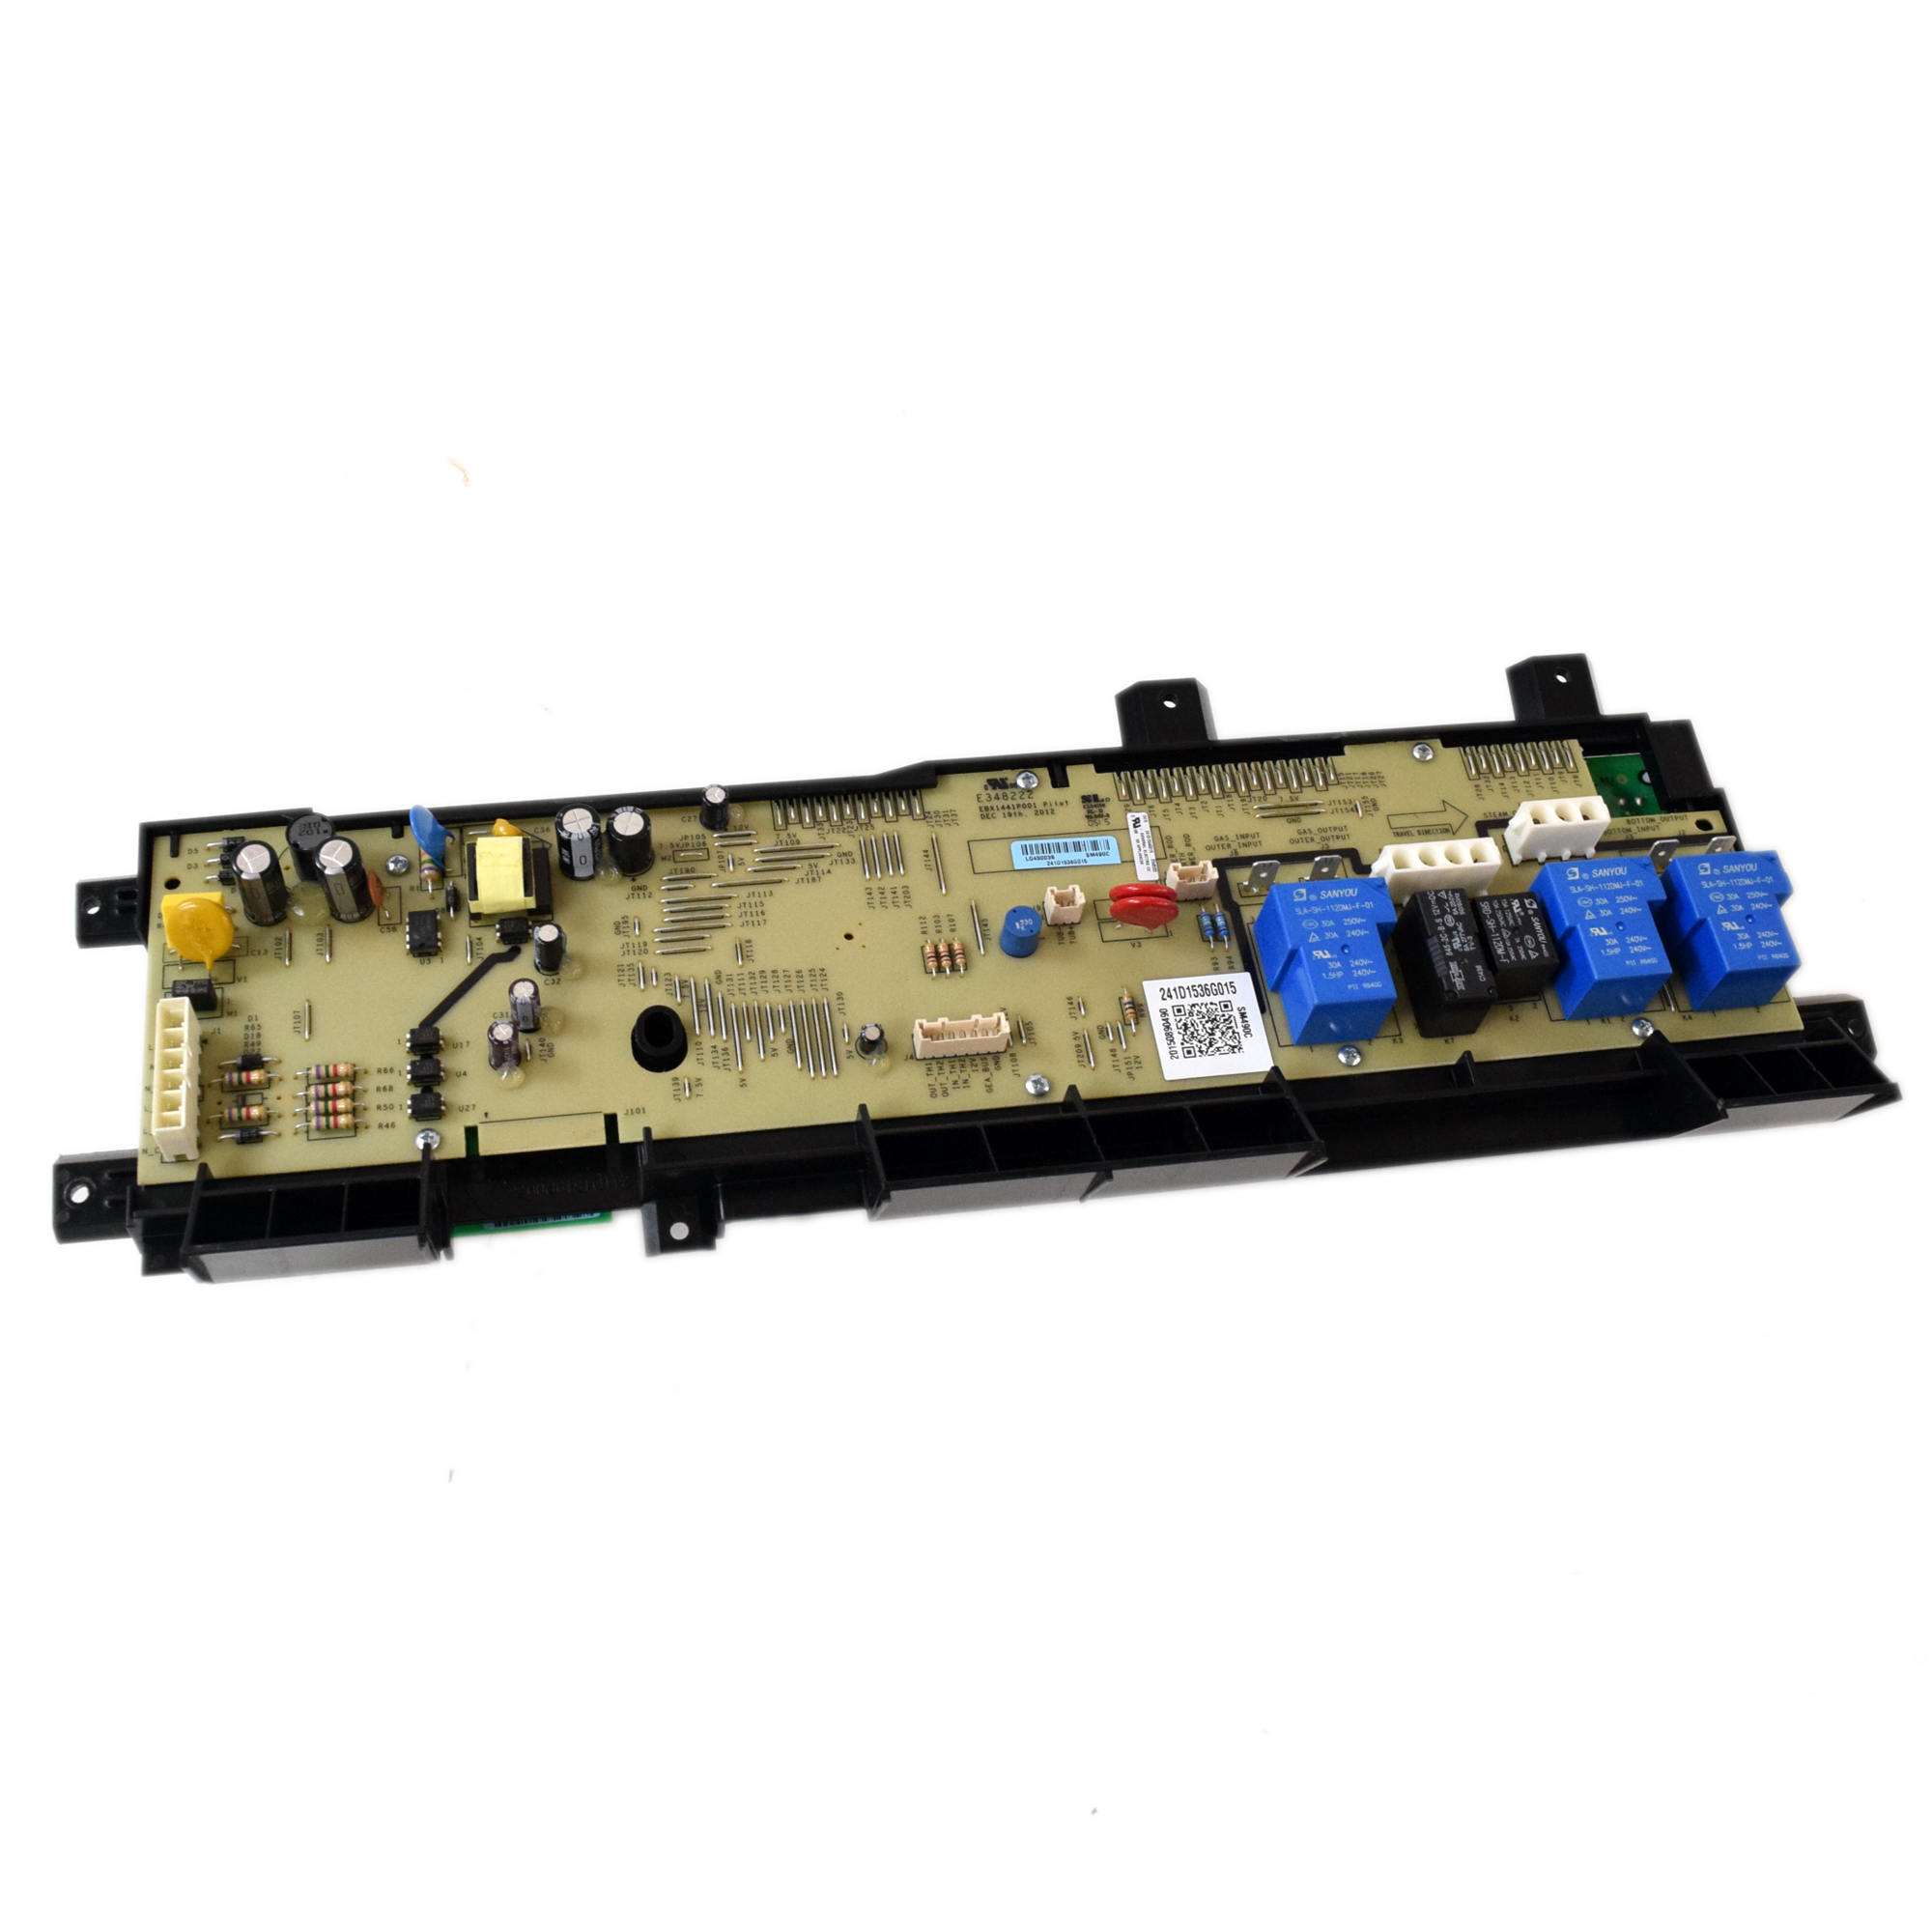 Ge WE04X23220 Dryer Electronic Control Board (replaces WE04X10185, WE04X20682) Genuine Original Equipment Manufacturer (OEM) Par